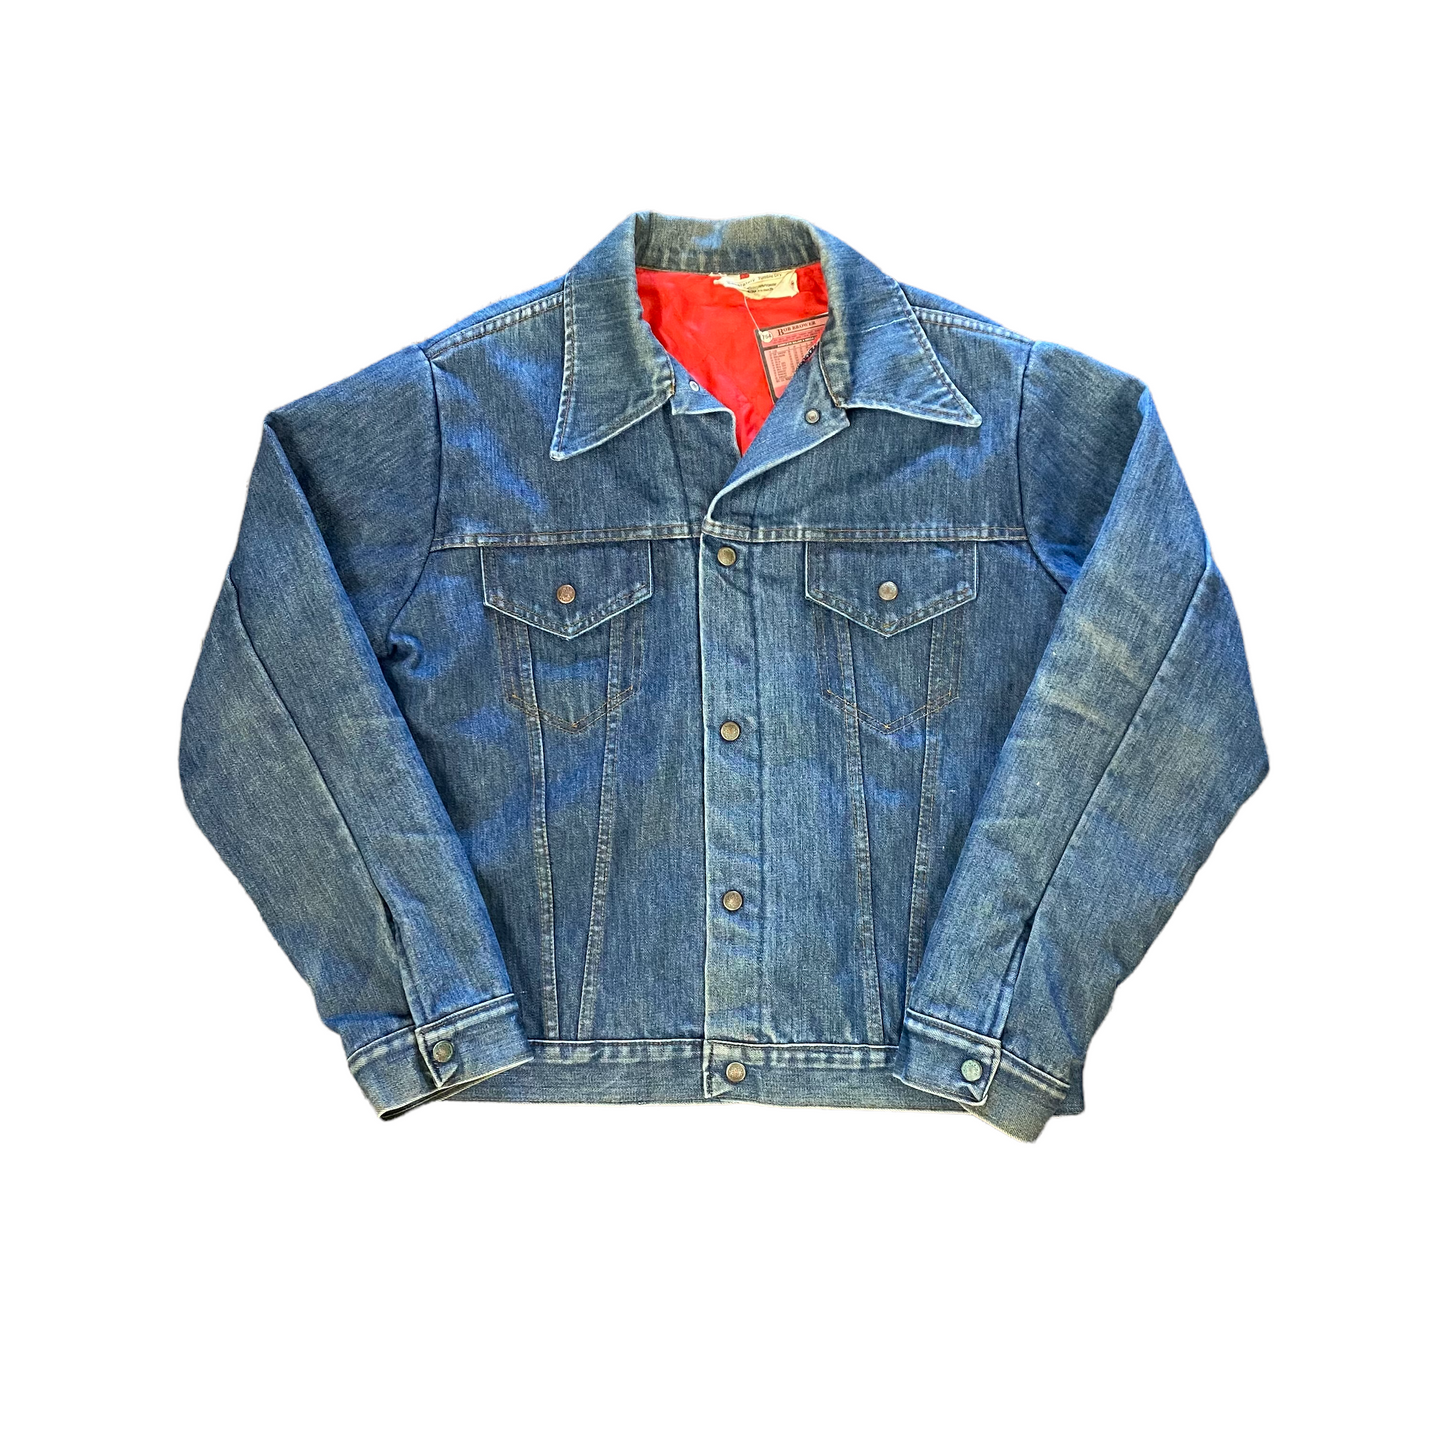 1970s JC Penney Lined Denim Jacket - Size Large